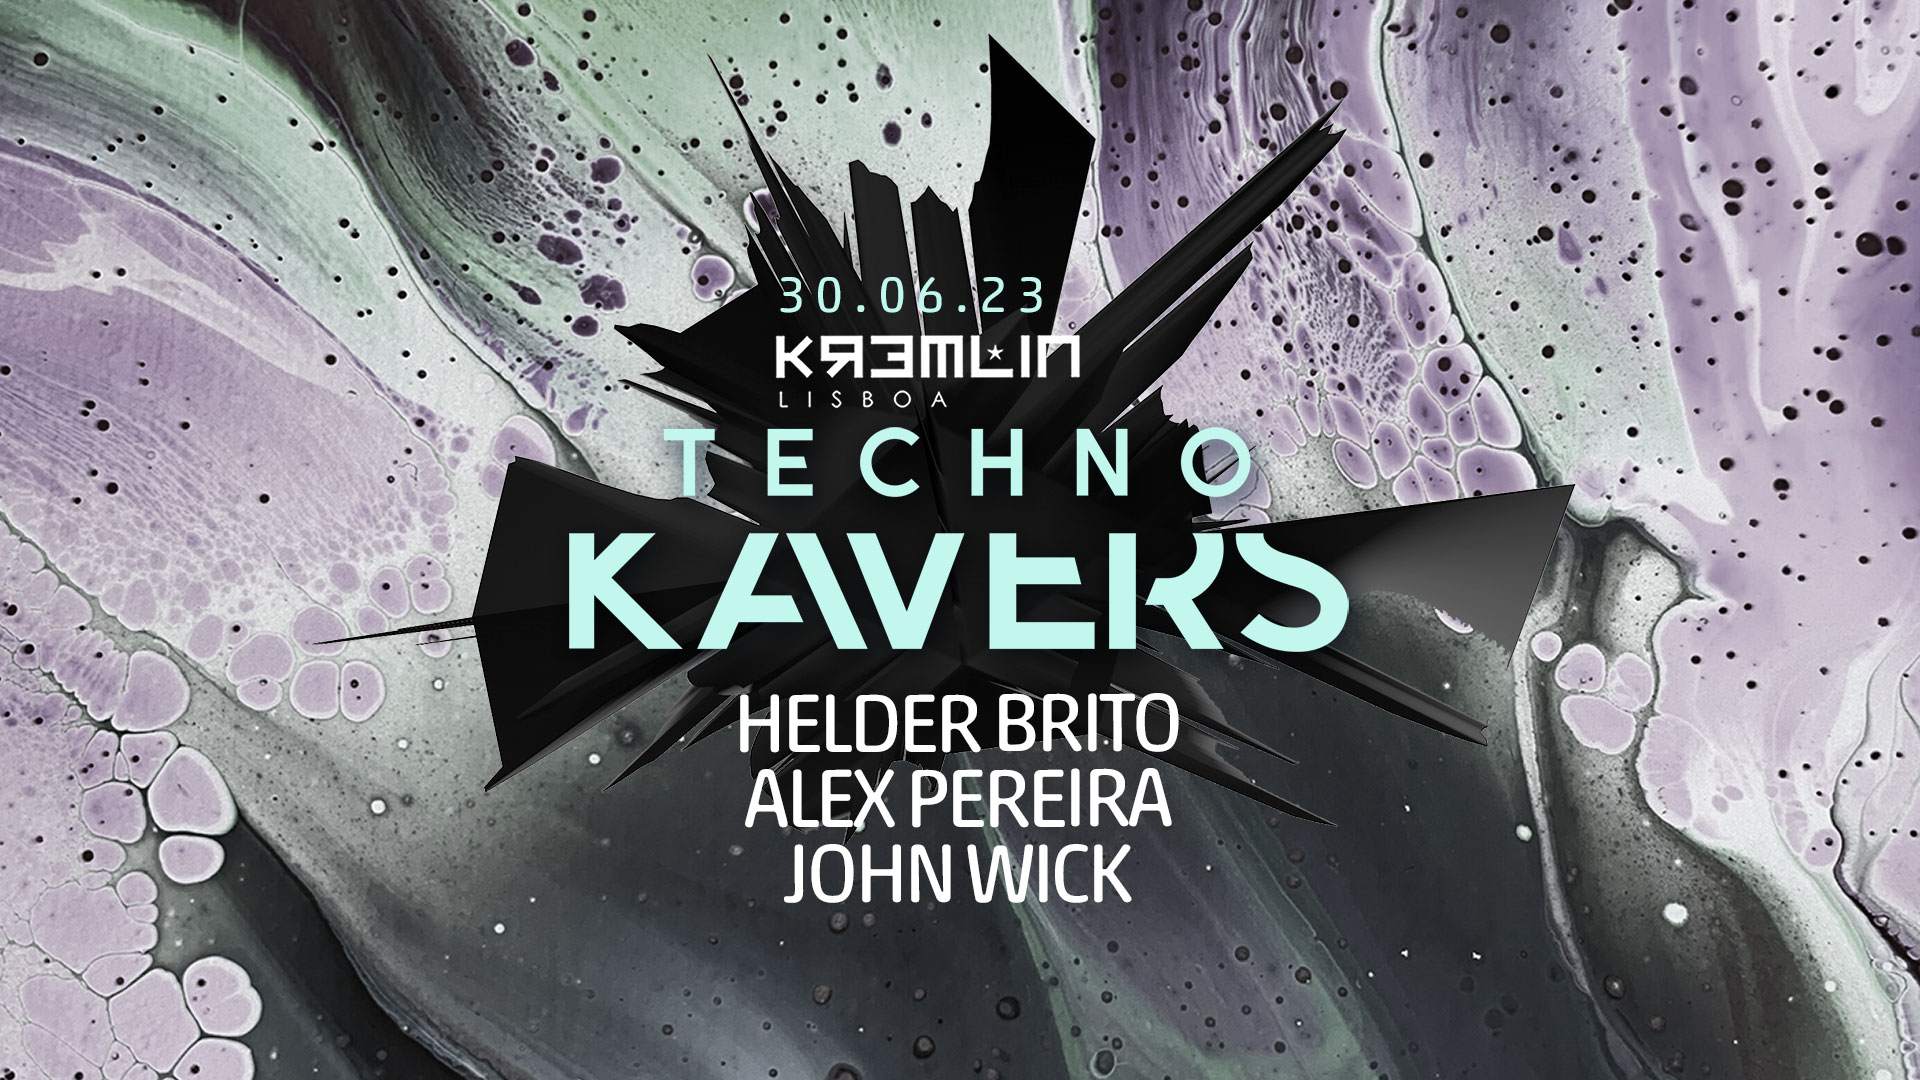 Techno Kavers: Helder Brito, Alex Pereira, John Wick - フライヤー表